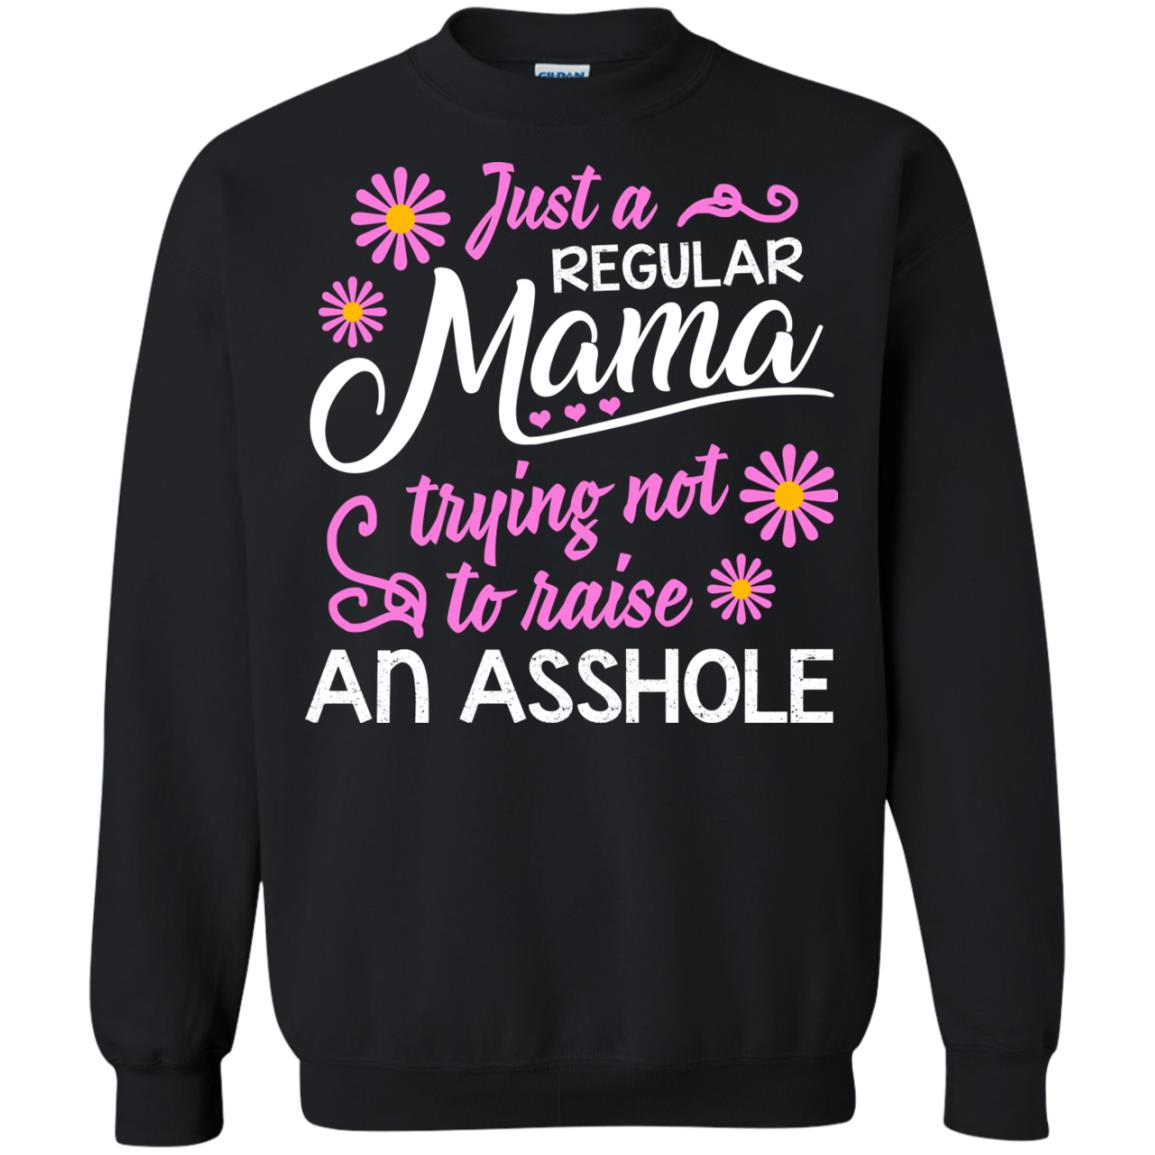 Just A Regular Mama Trying Not To Raise An Asshole Shirt For MomG180 Gildan Crewneck Pullover Sweatshirt 8 oz.